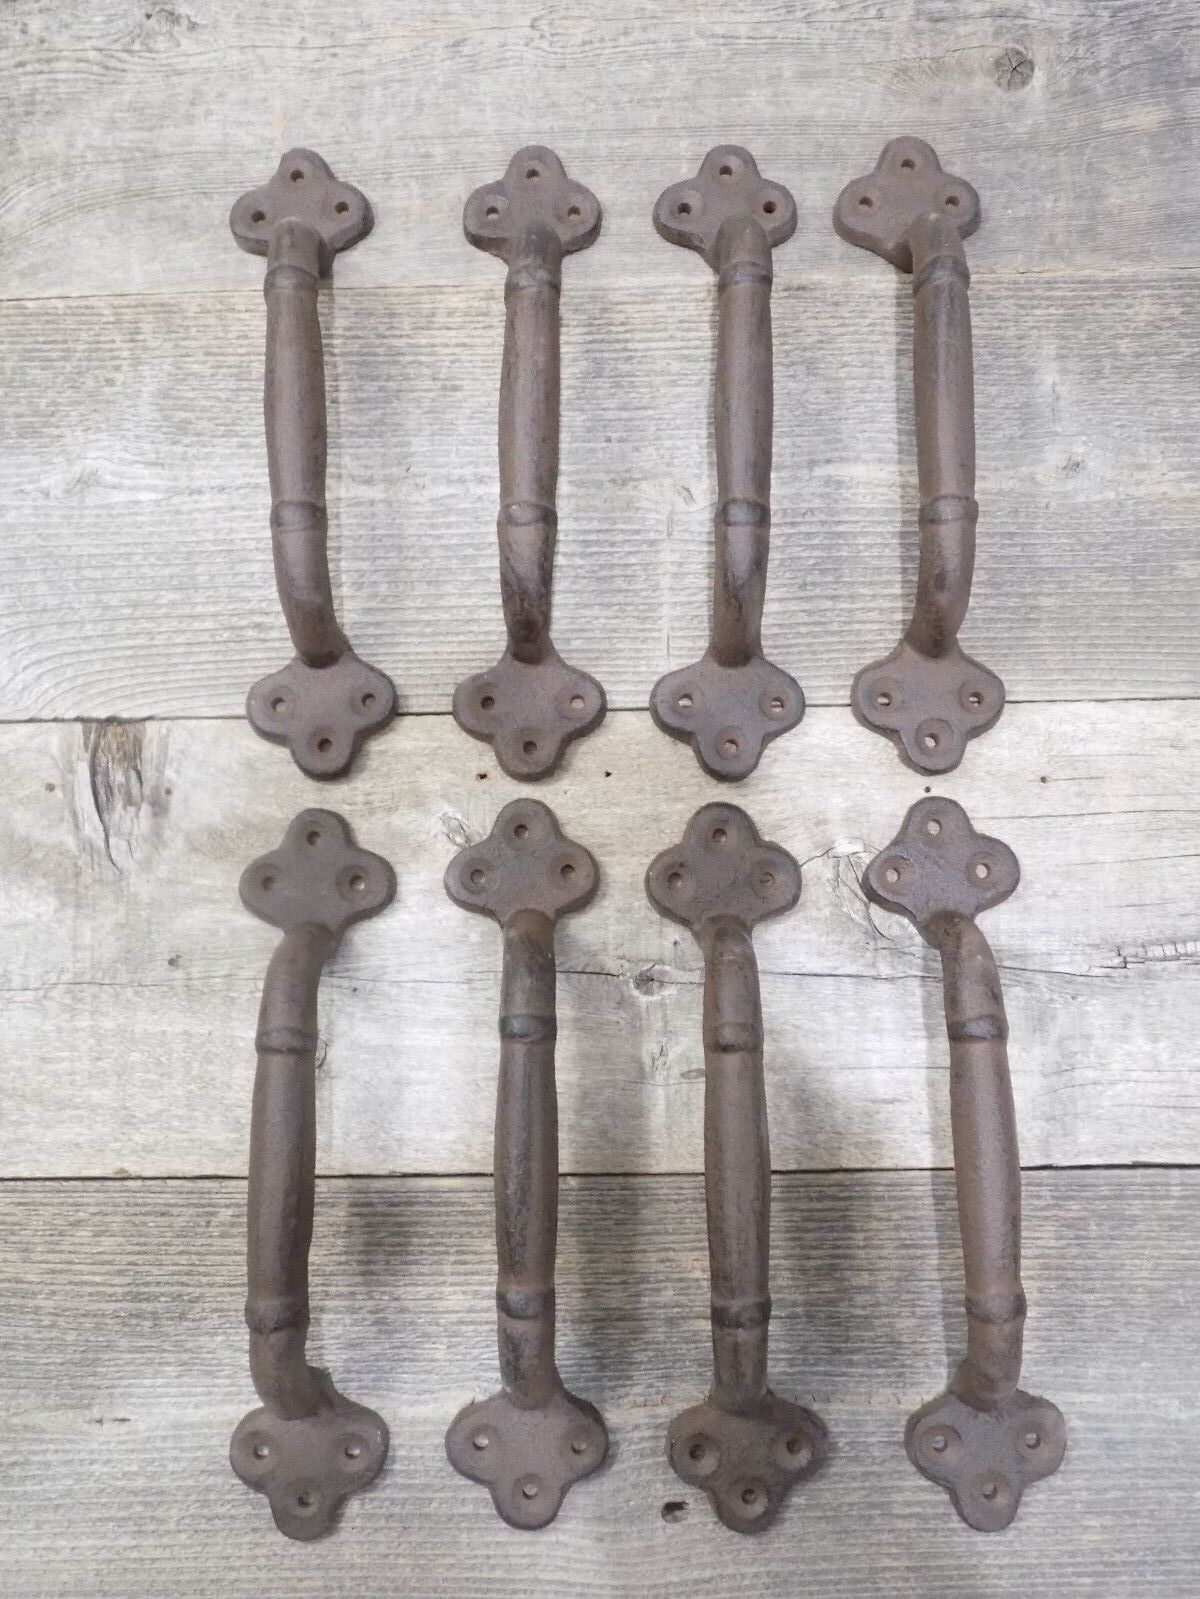 8 Rustic Cast Iron Barn Handles Antique Style Restore Gate Pull Door Handle LONG